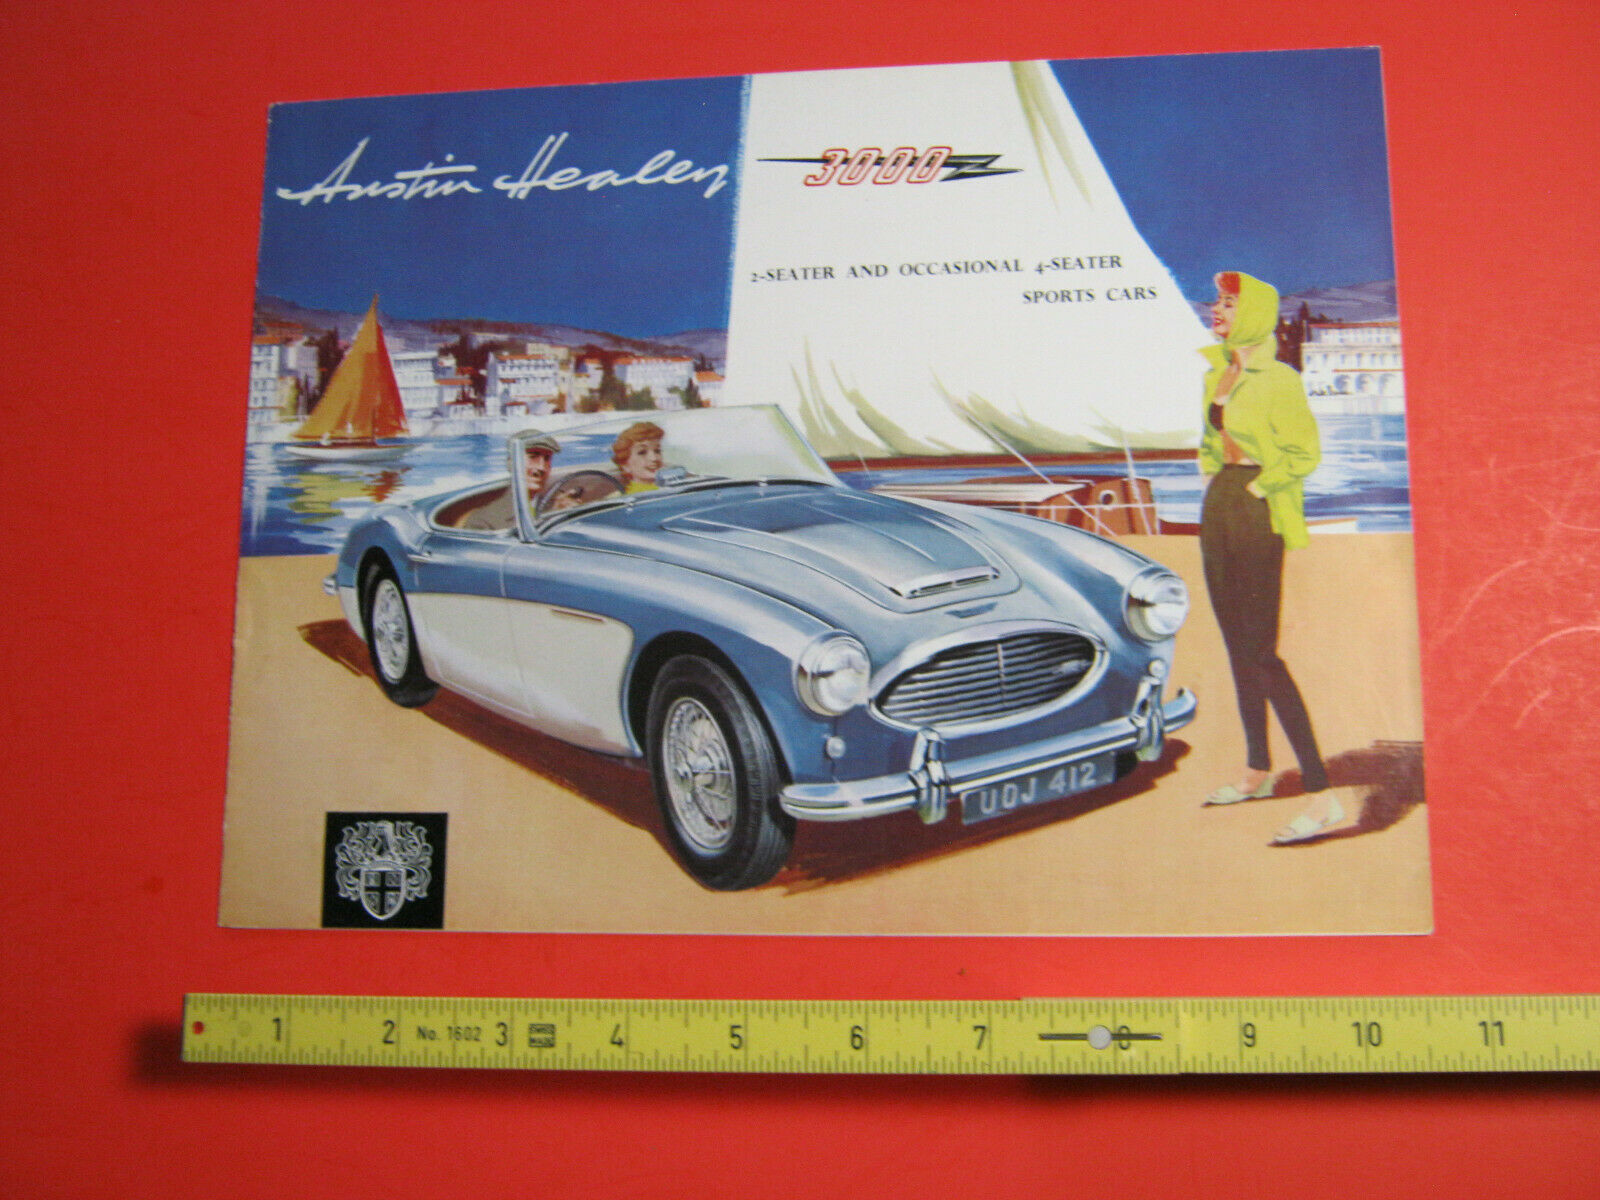 Austin Healey 3000 Brochure 1958 /1959 - Original Uk Issue Rare - 1734/a